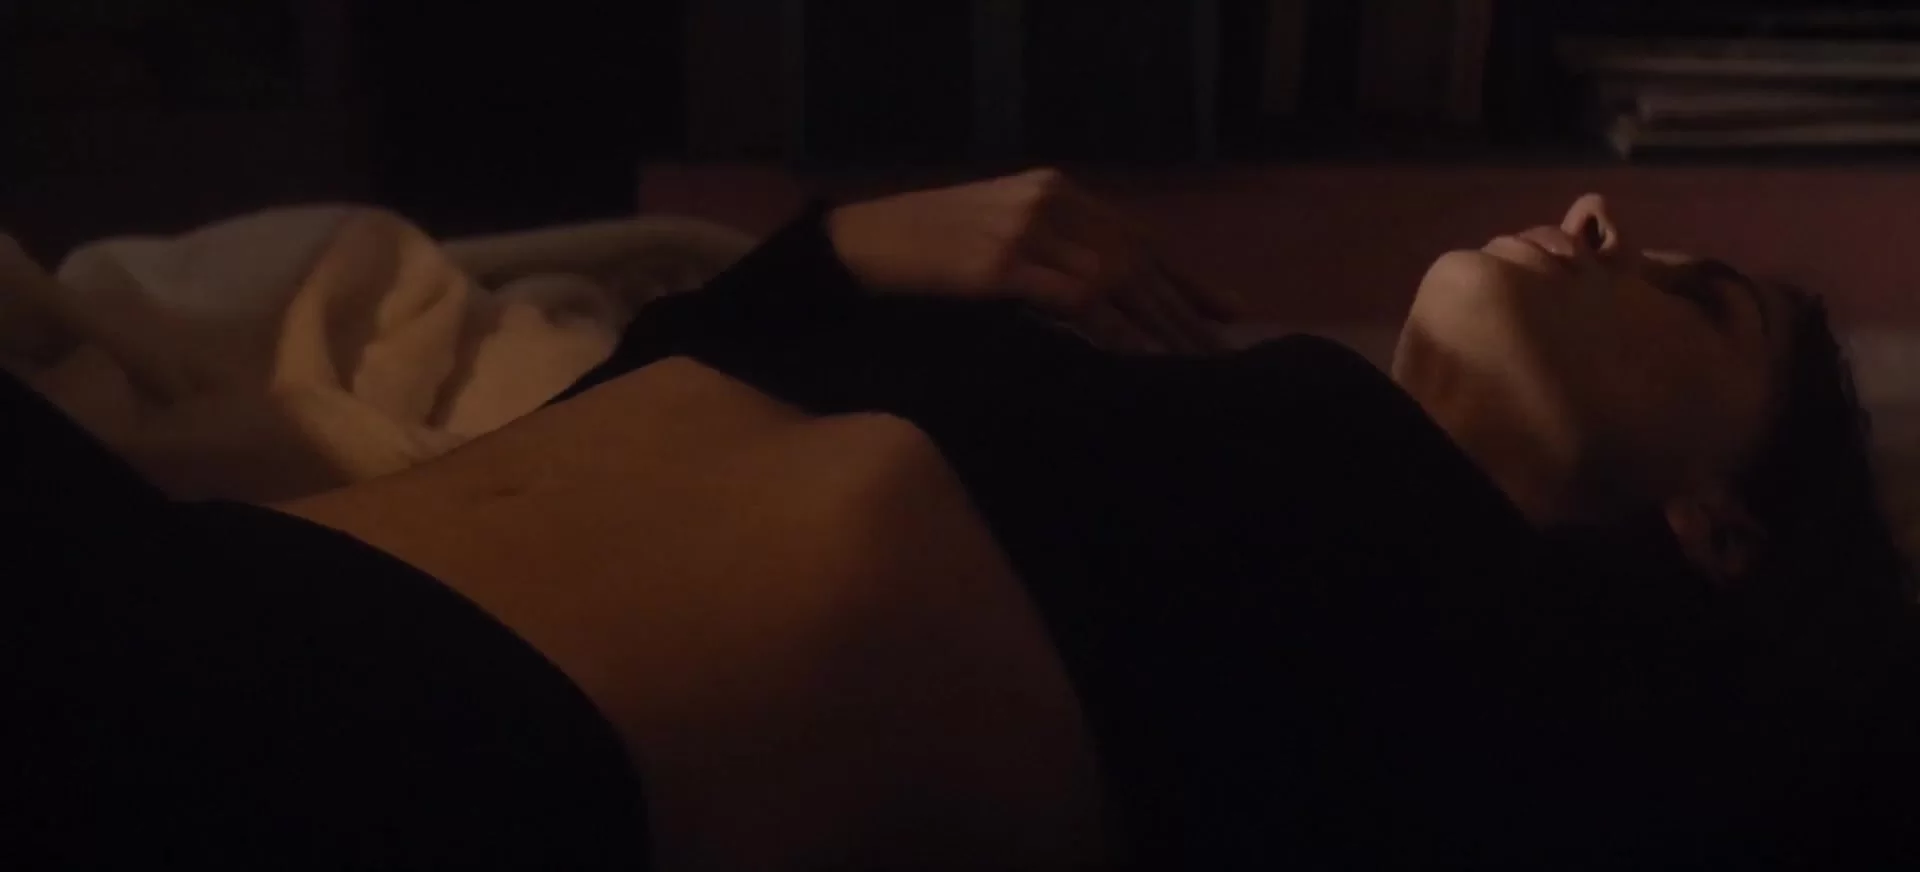 Housewife - Masturbation Scenes in Movies erotic sex scenes photo